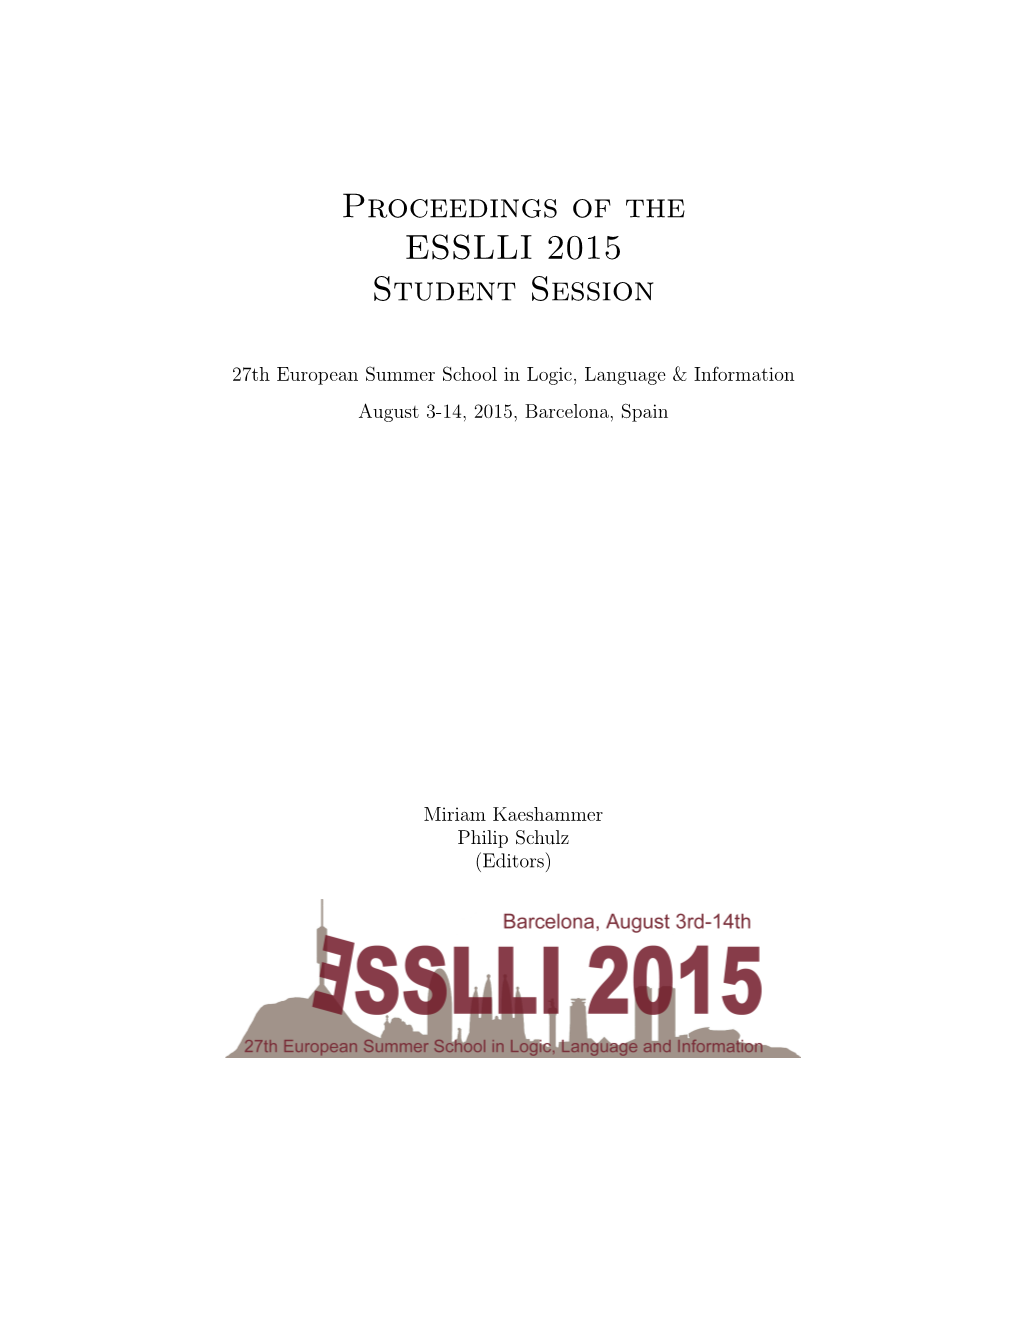 Proceedings of the ESSLLI 2015 Student Session